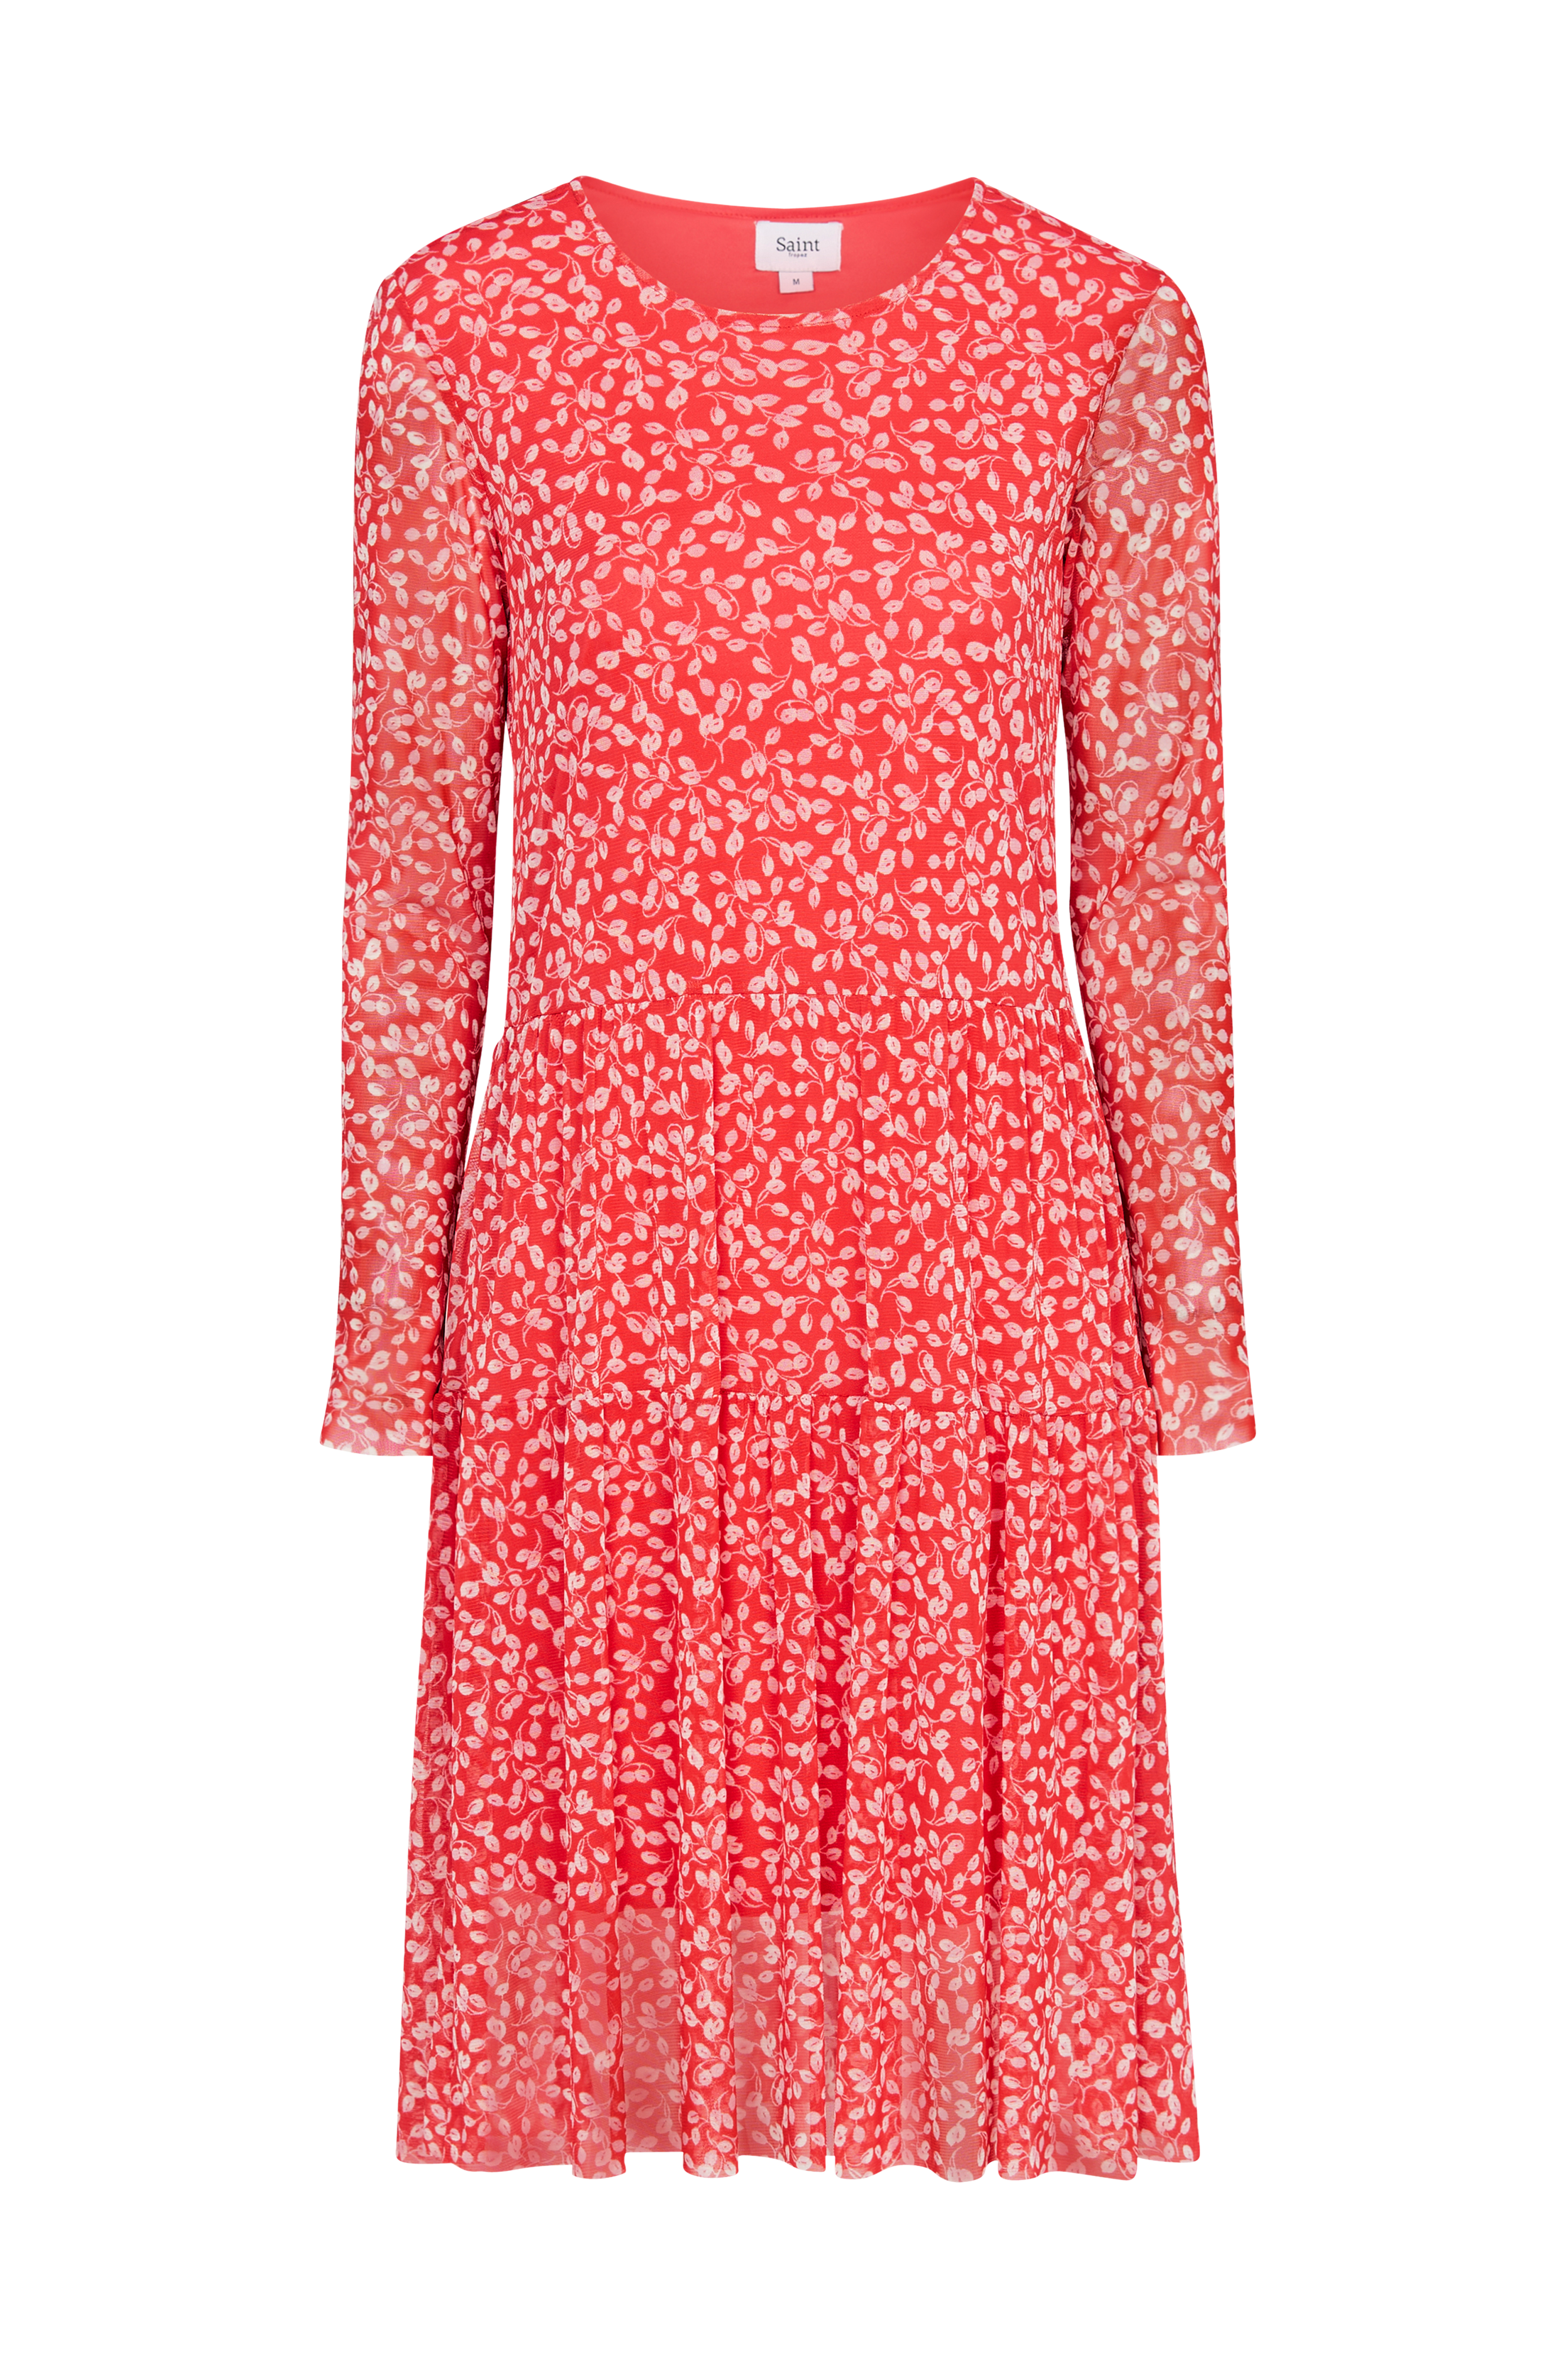 Saint Tropez Kjole Leaf Dress Mesh - Rød kjoler | Ellos.dk